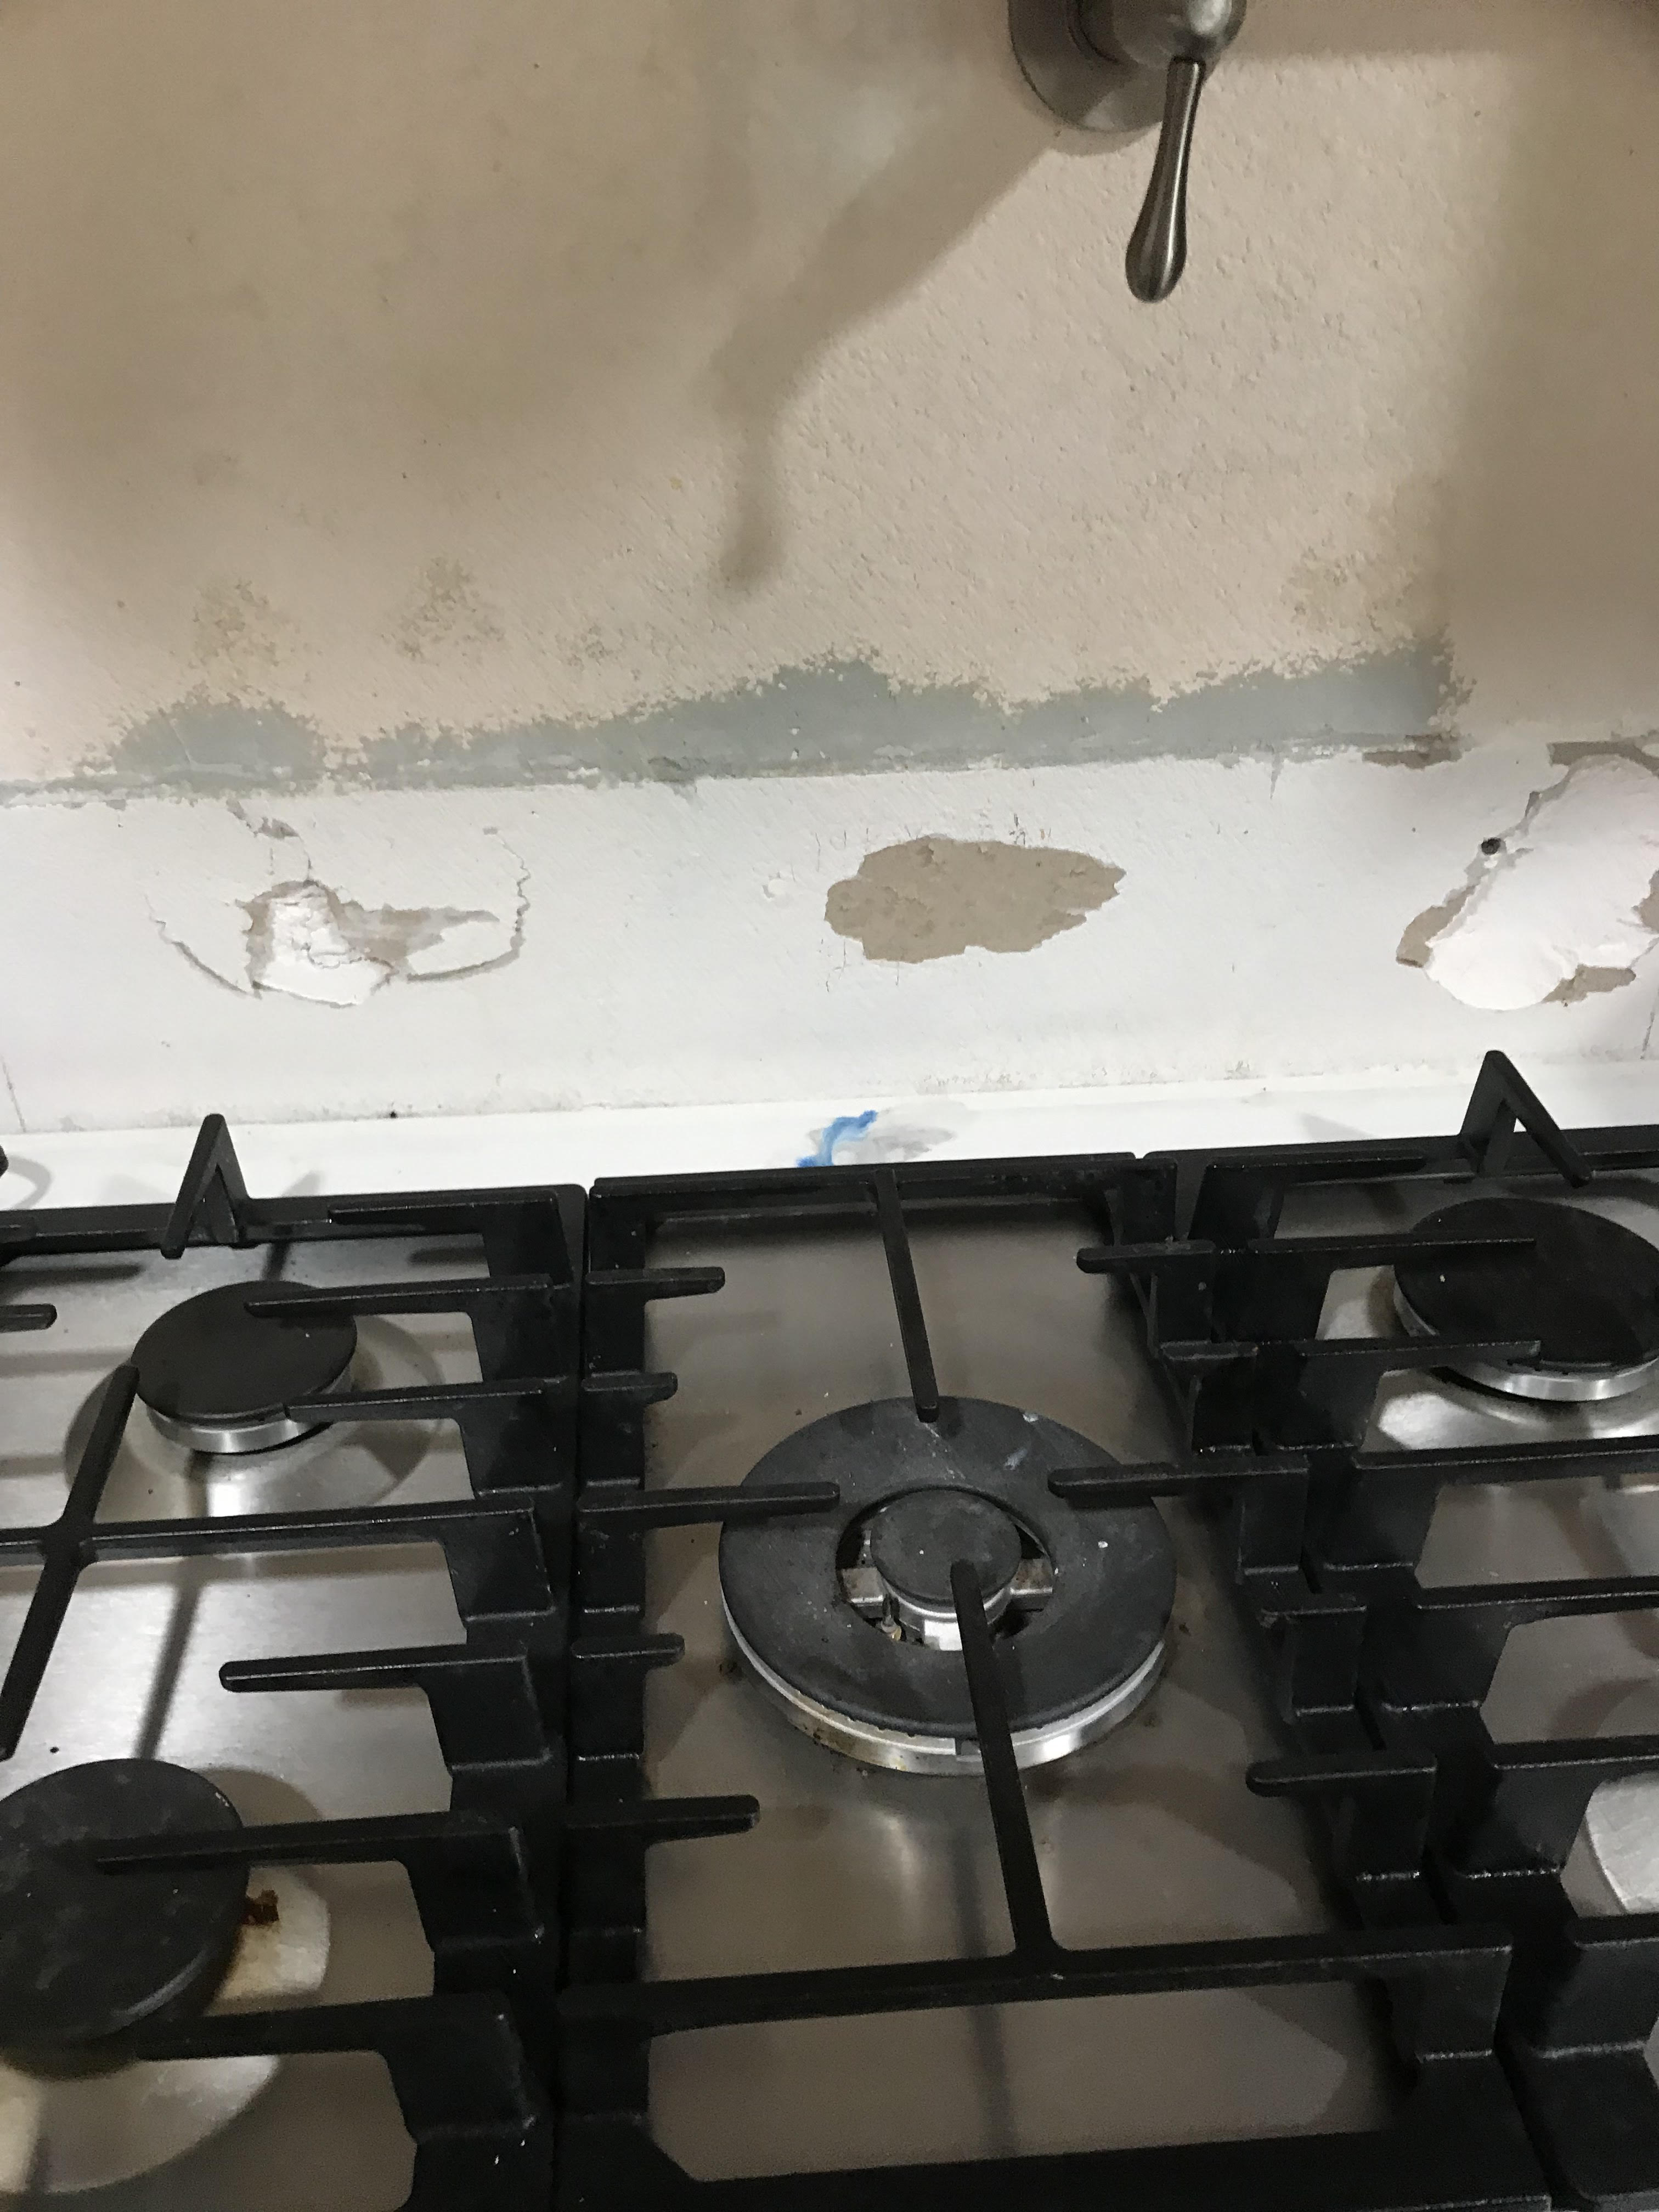 damage behing the cooktop